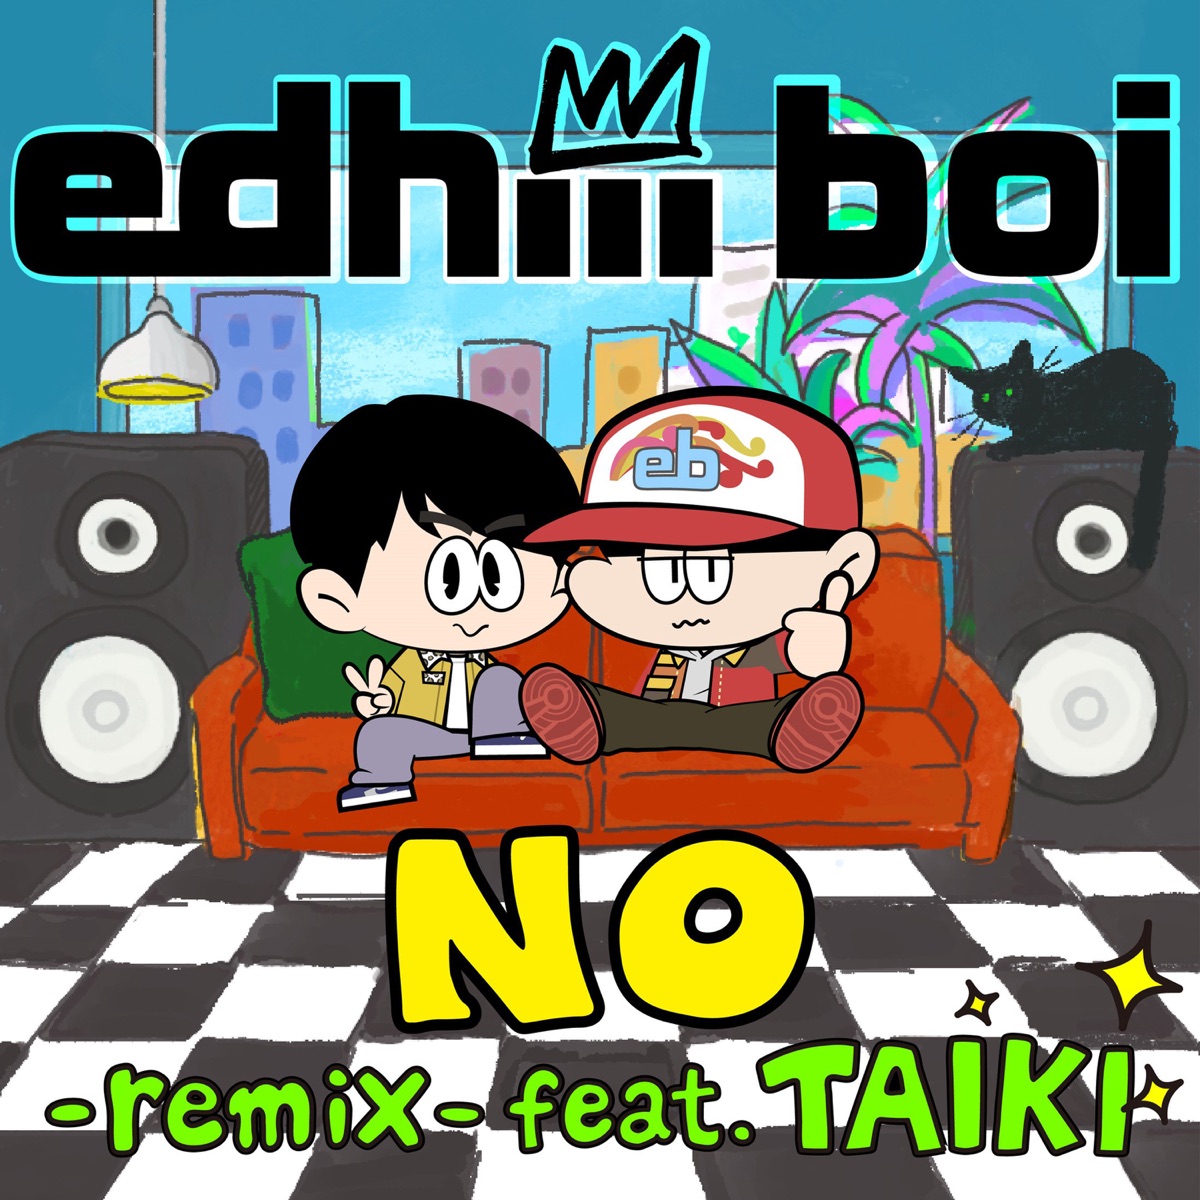 『edhiii boi - NO -remix- feat. TAIKI』収録の『NO -remix- feat. TAIKI』ジャケット